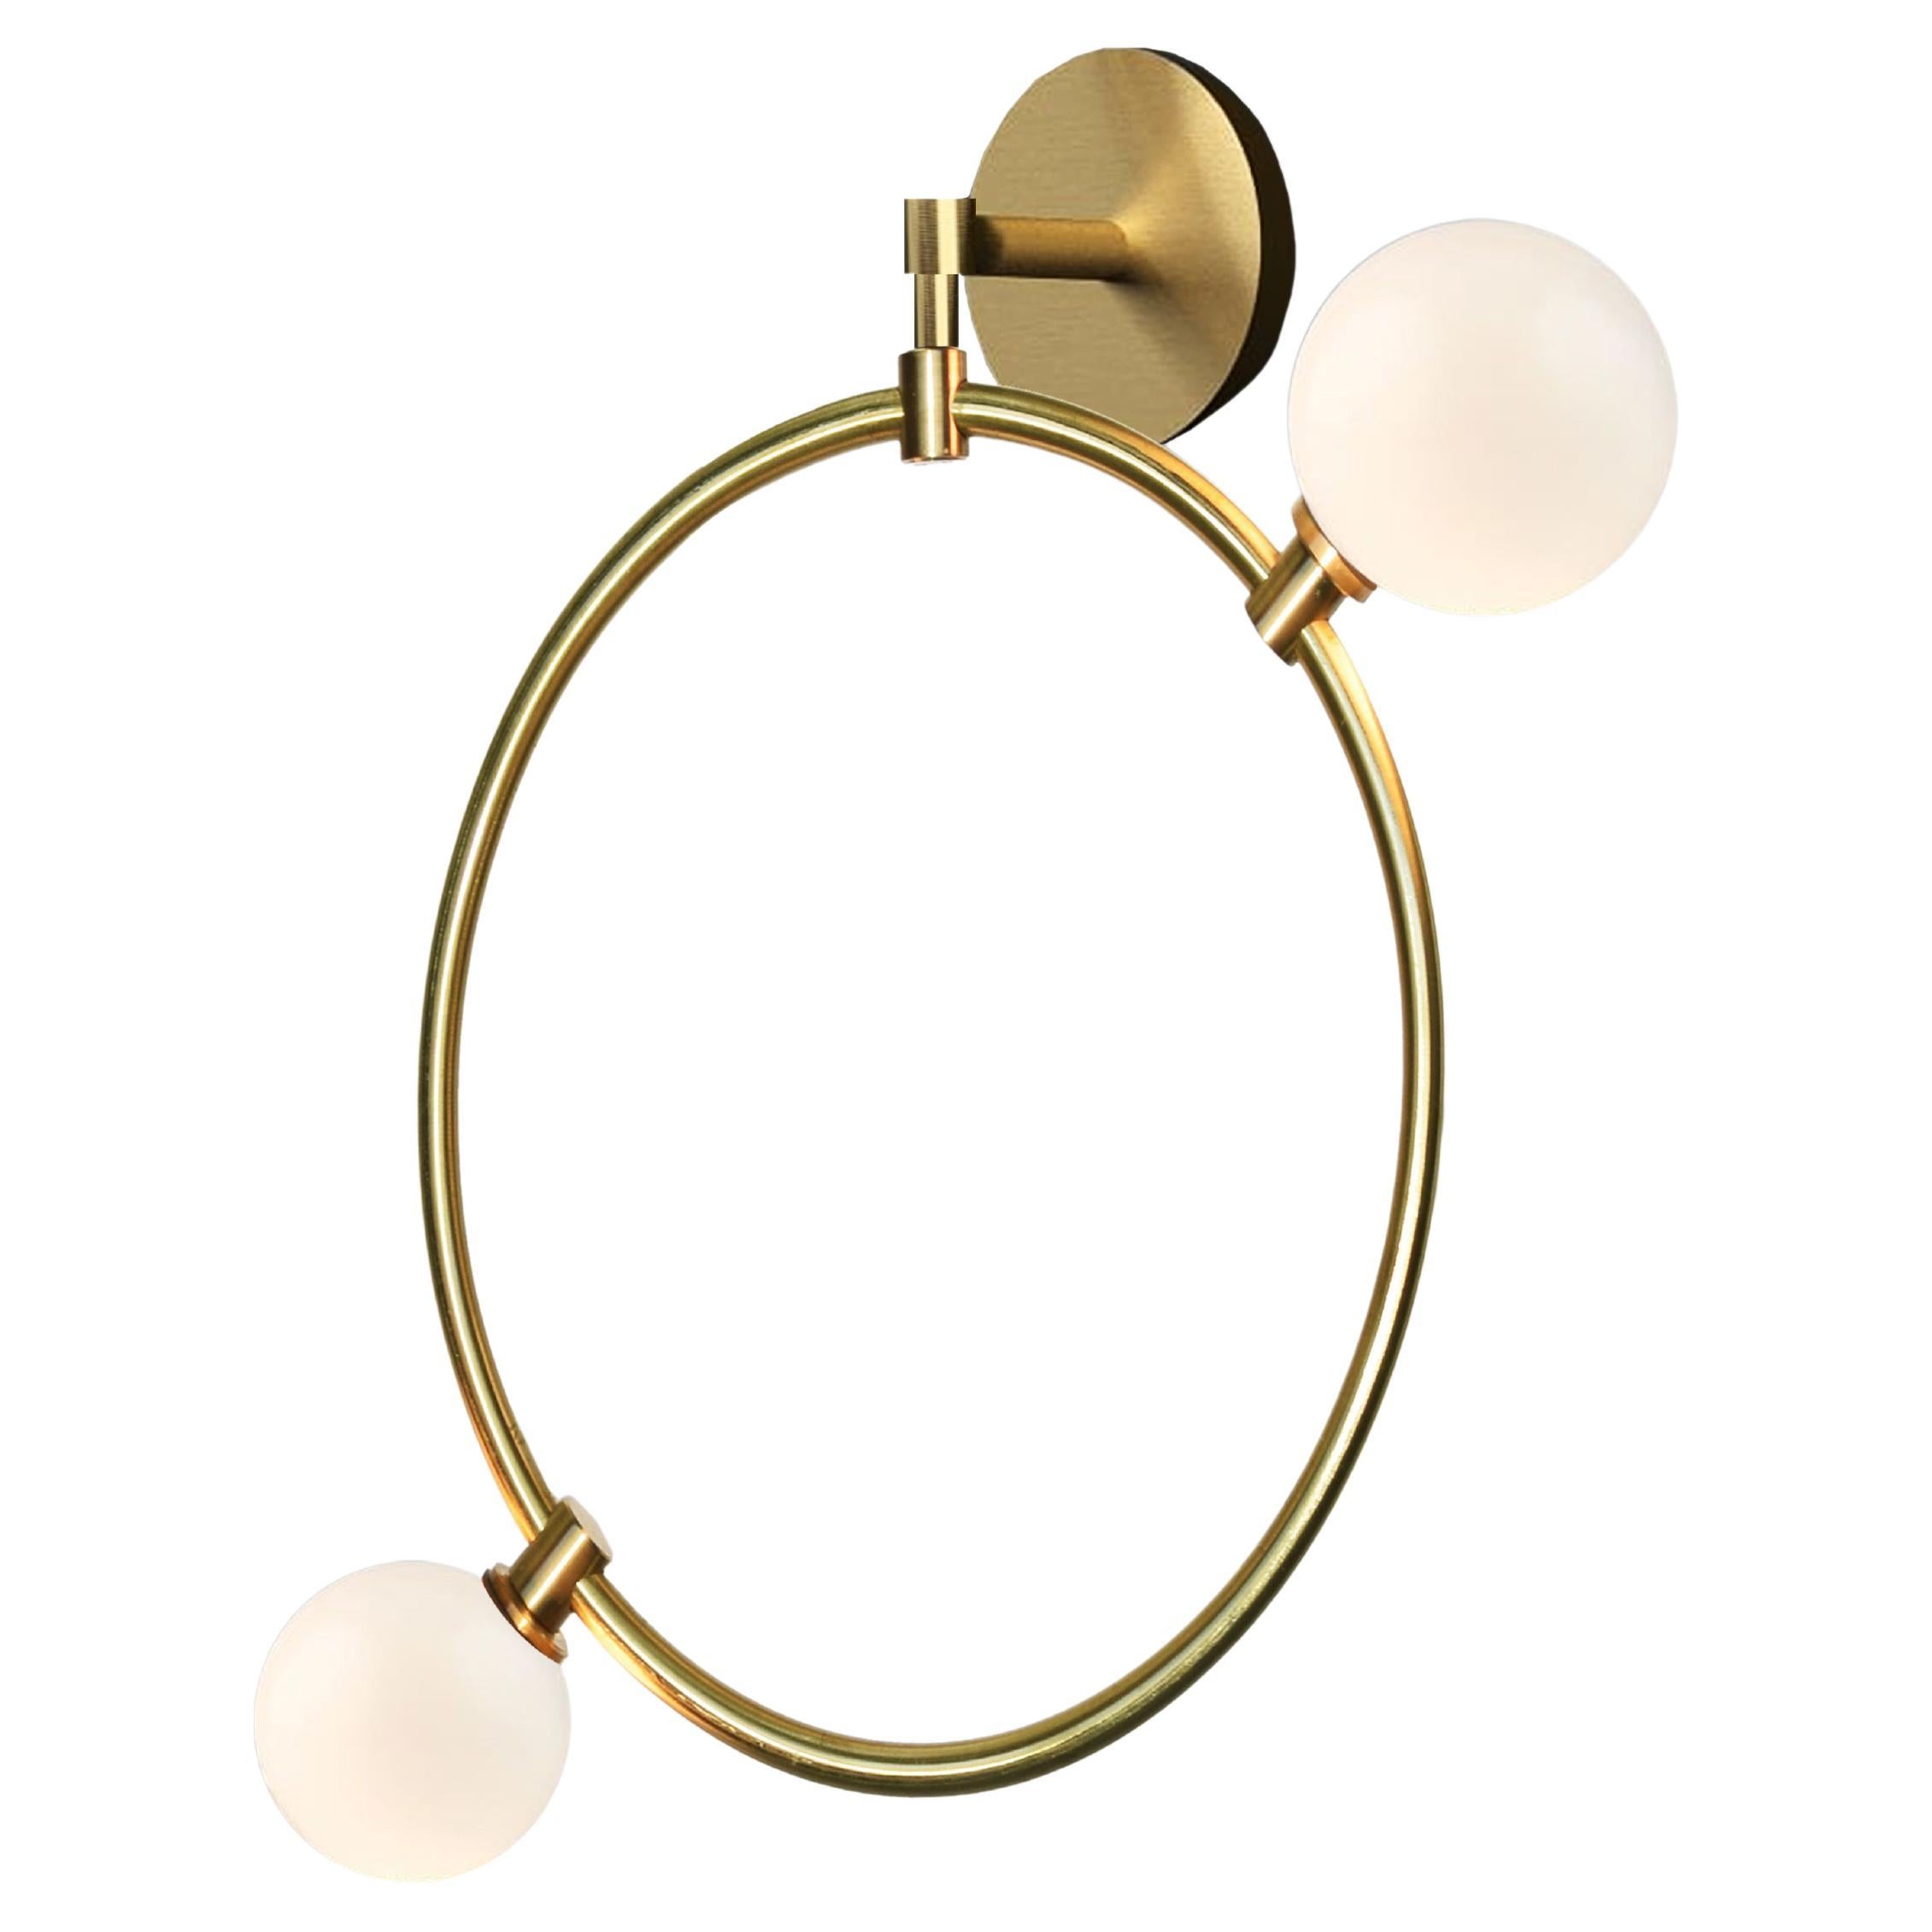 'Drops Wall - Medium' by Marc Wood. Handmade Brass Ring Lamp, Opal Glass Shades